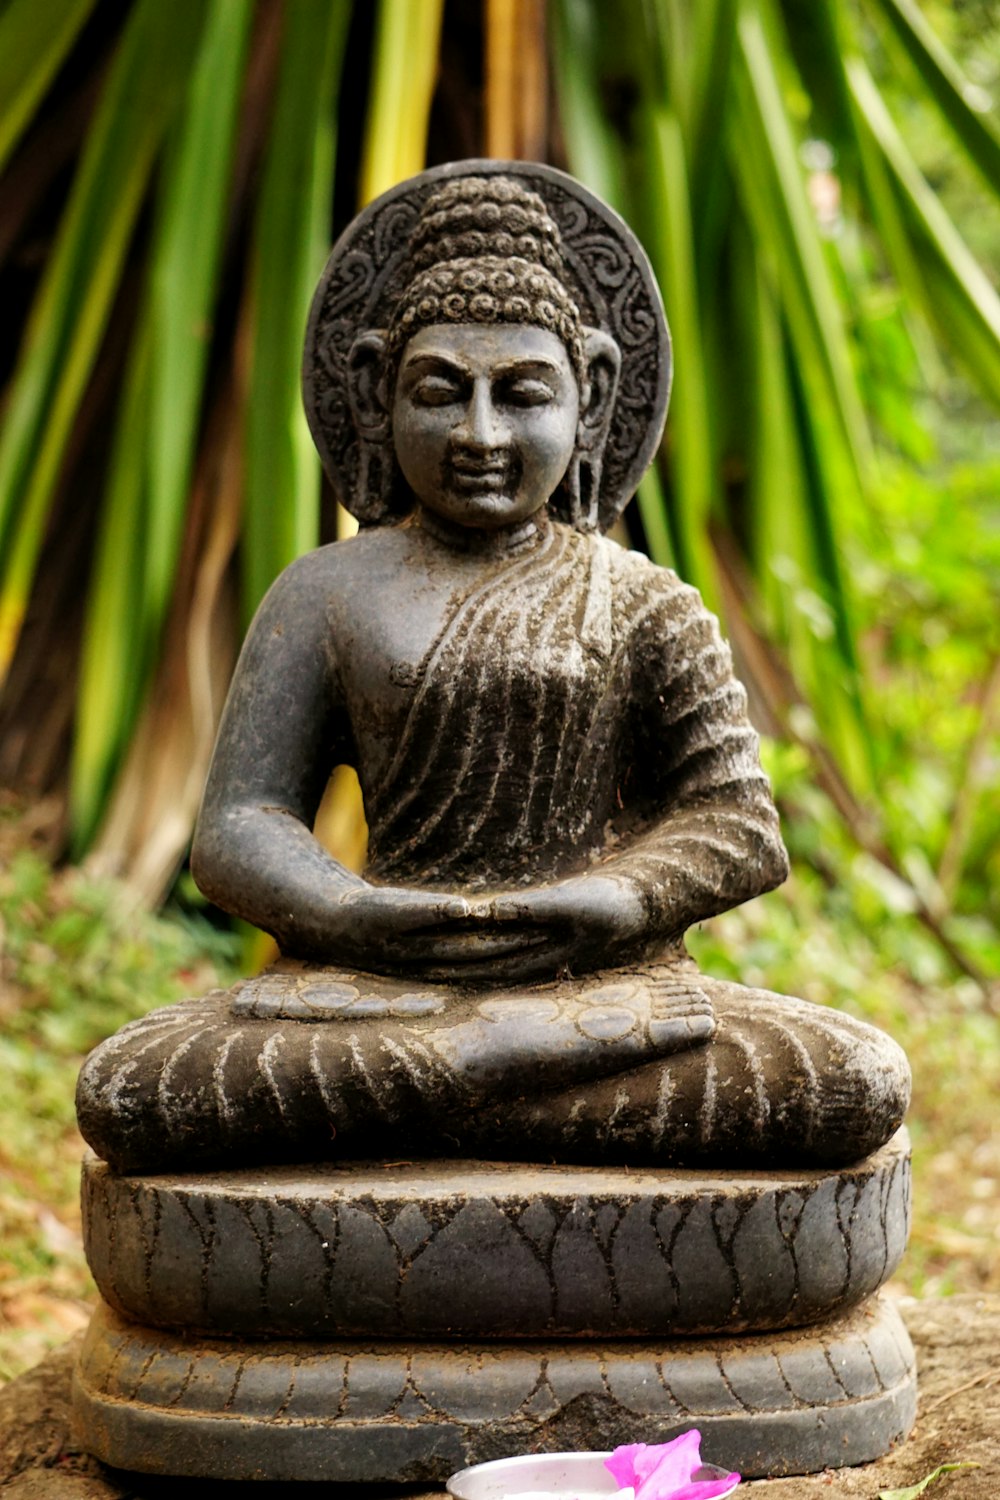 gray concrete buddha statue near green plants during daytime